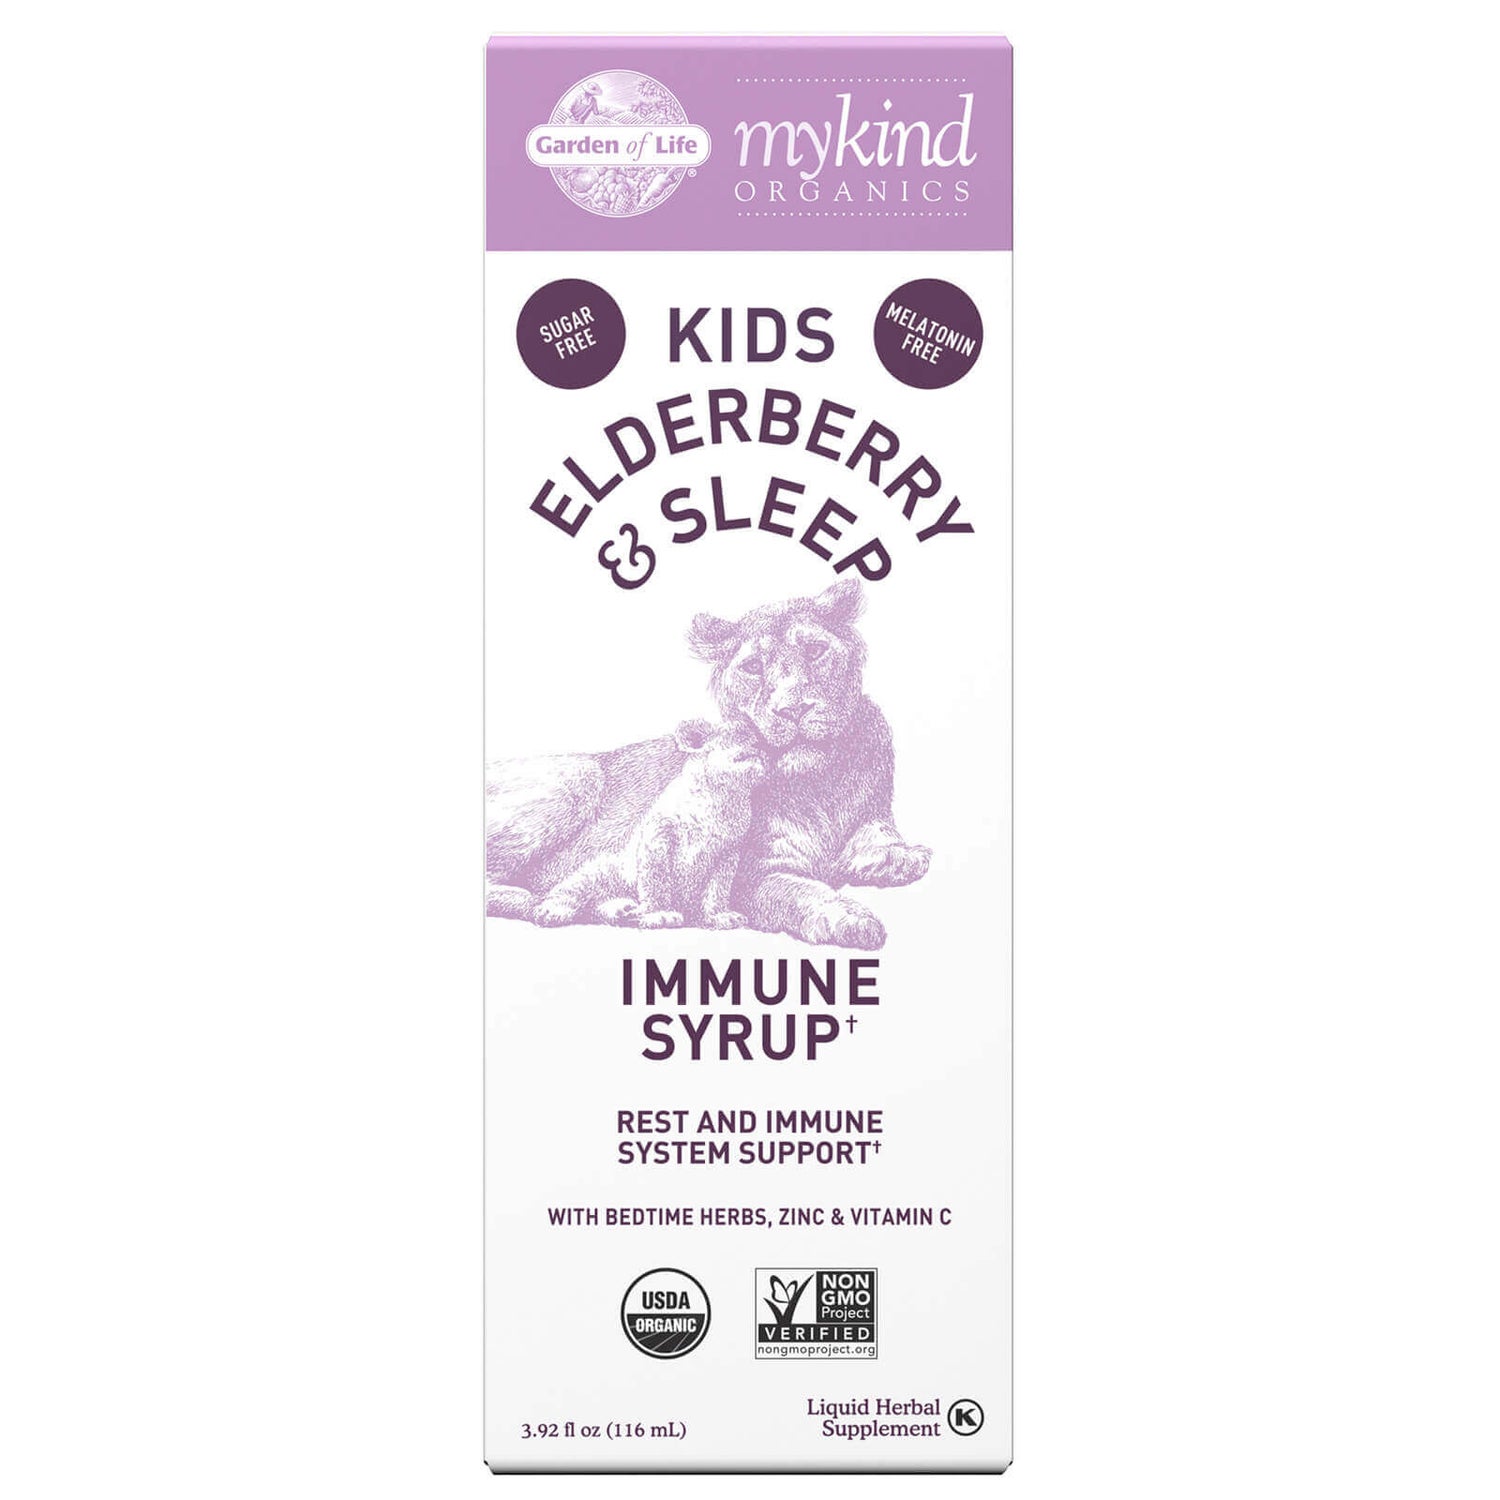 Mykind Organics Kids Vlierbessen & Slaap immuunsiroop - 116 ml